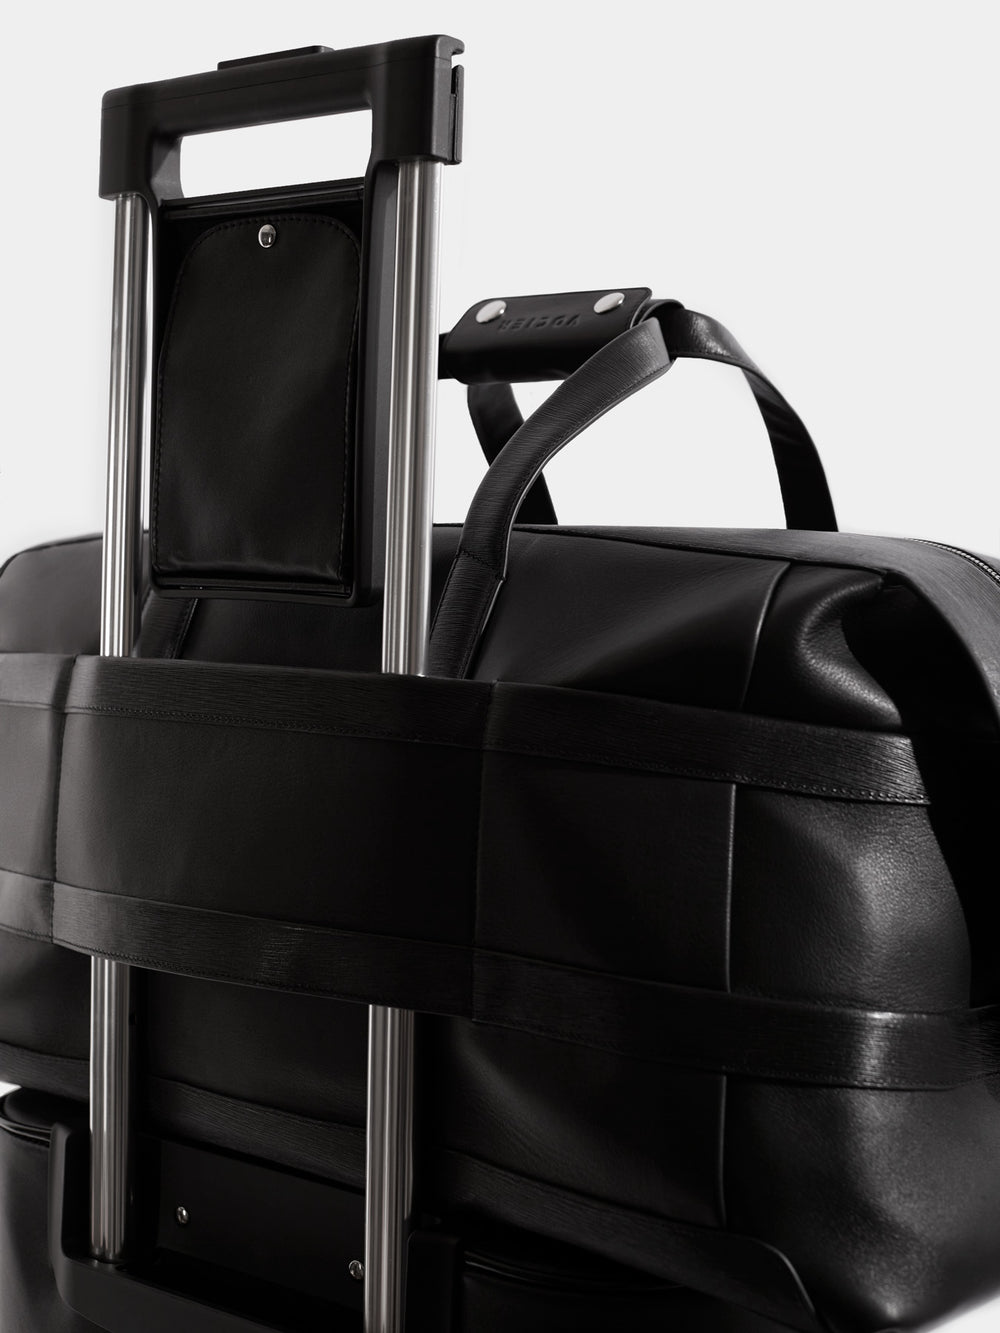 vantage weekender bag on carry-on luggage travel set back